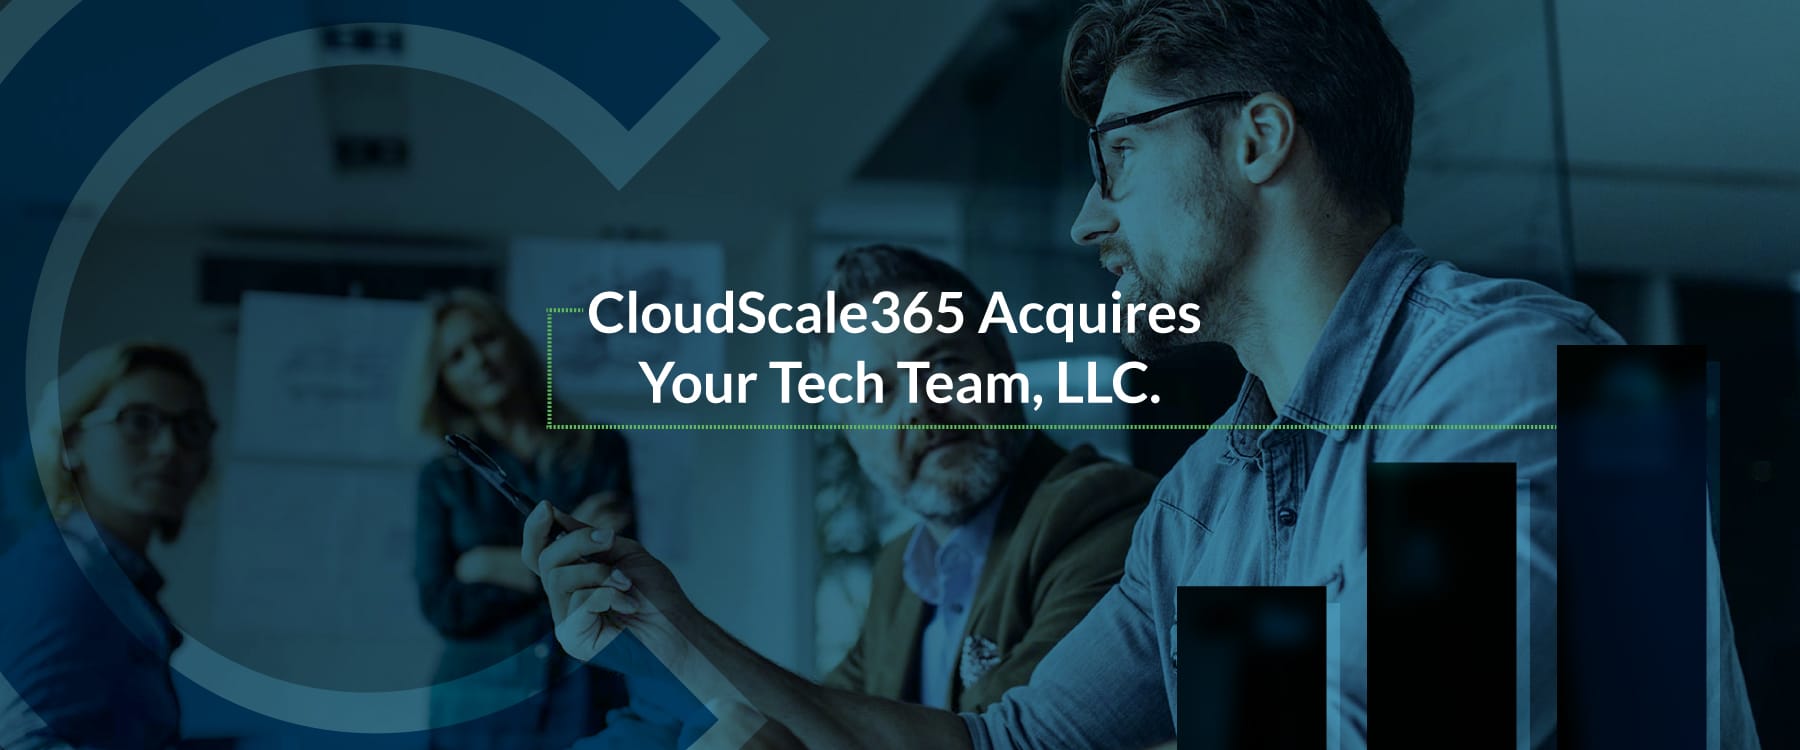 CloudScale365 Acquires Your Tech Team, LLC.